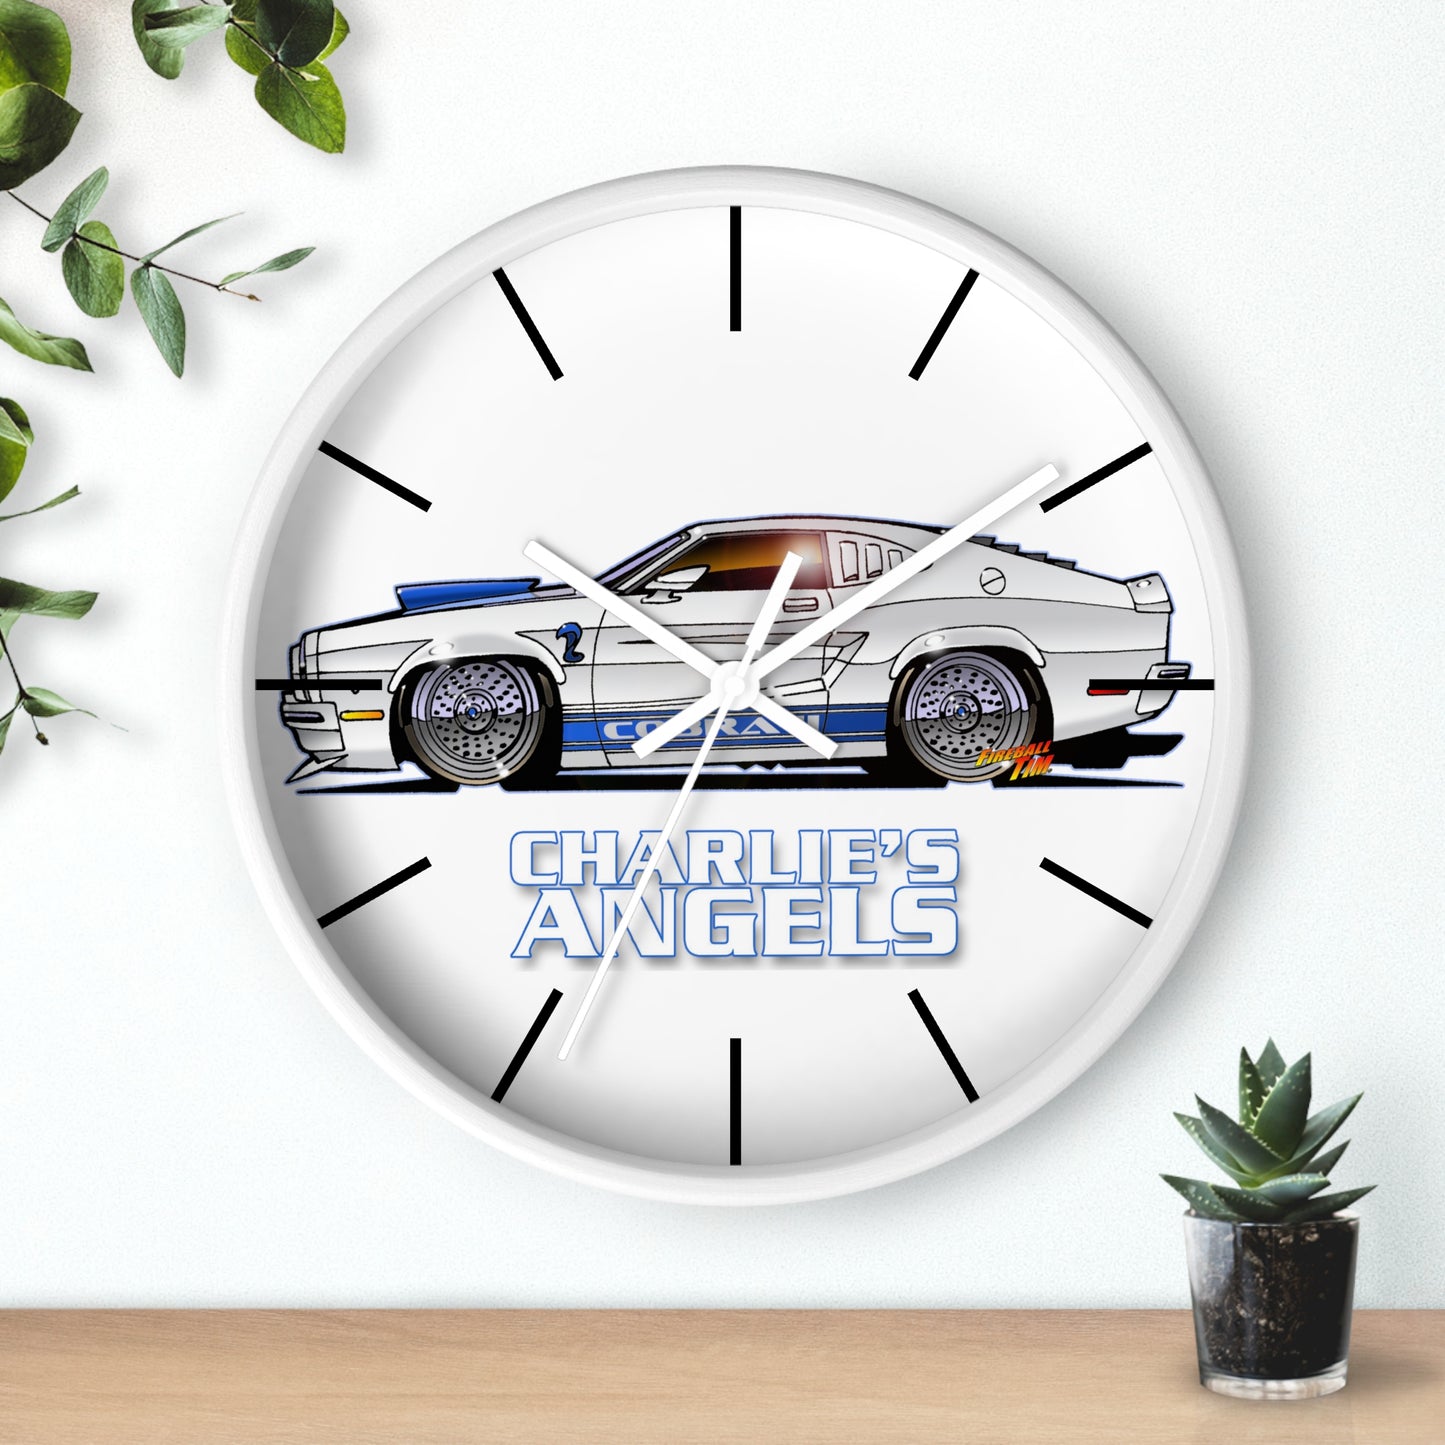 CHARLIES ANGELS TV Show Ford Mustang Cobra 2 Garage Wall Clock